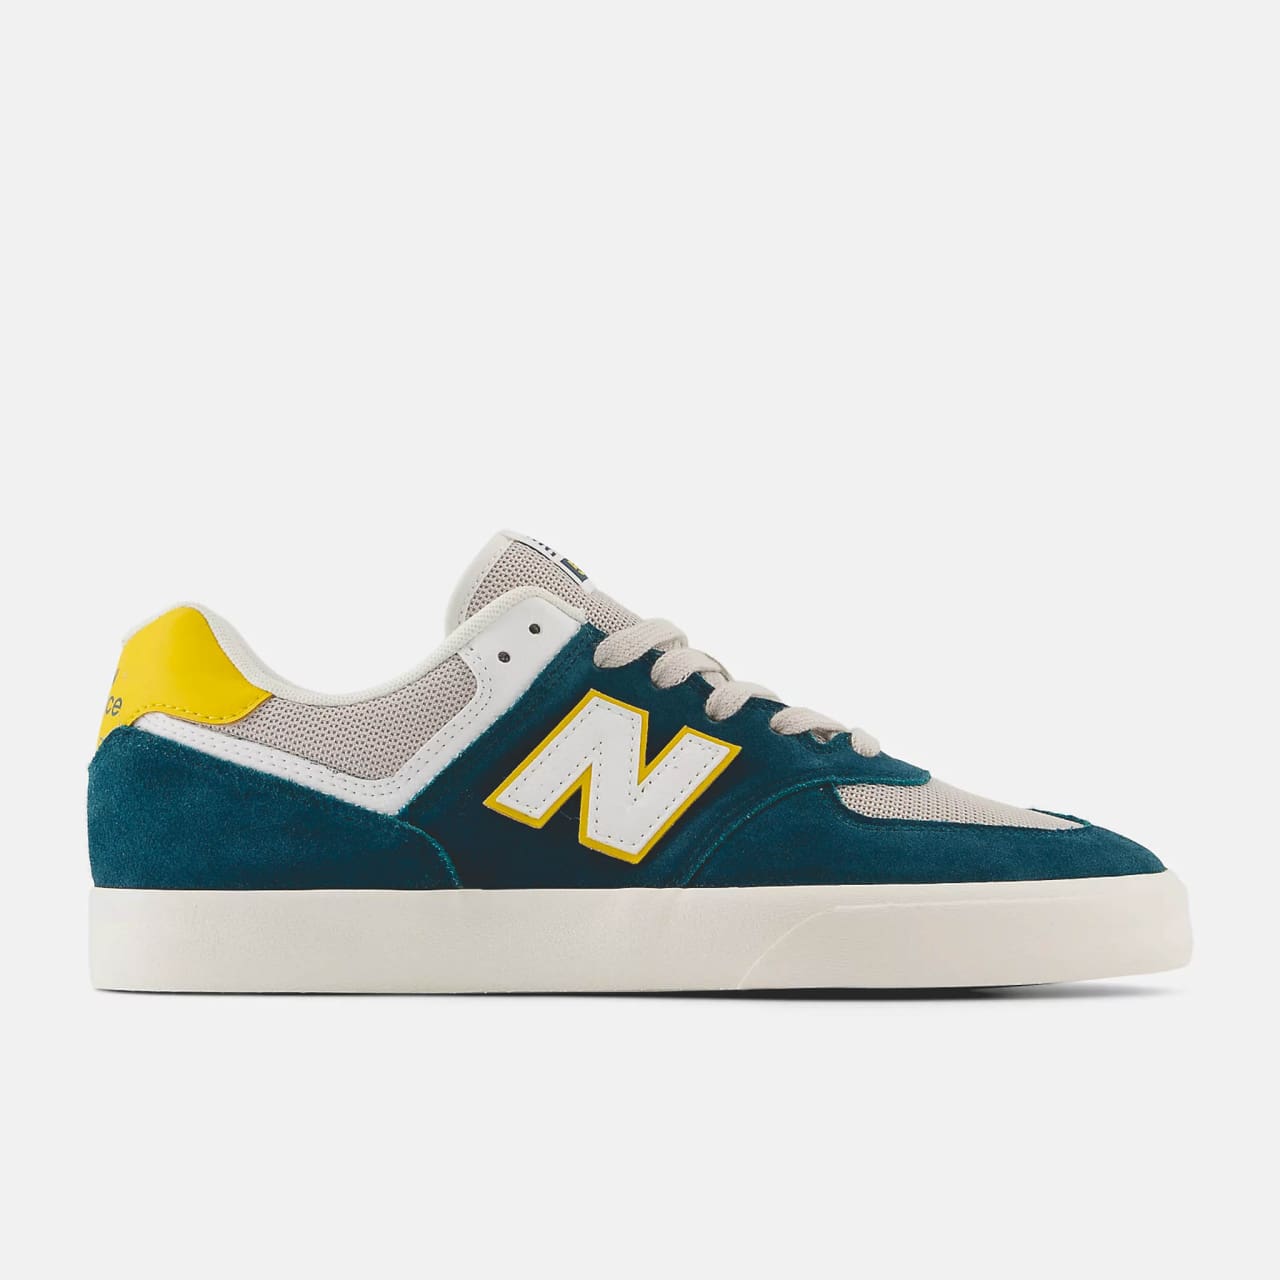 NB Numeric 574 Vulc, Tijdloze <strong>New Balance 574</strong> is nu een skatesneaker